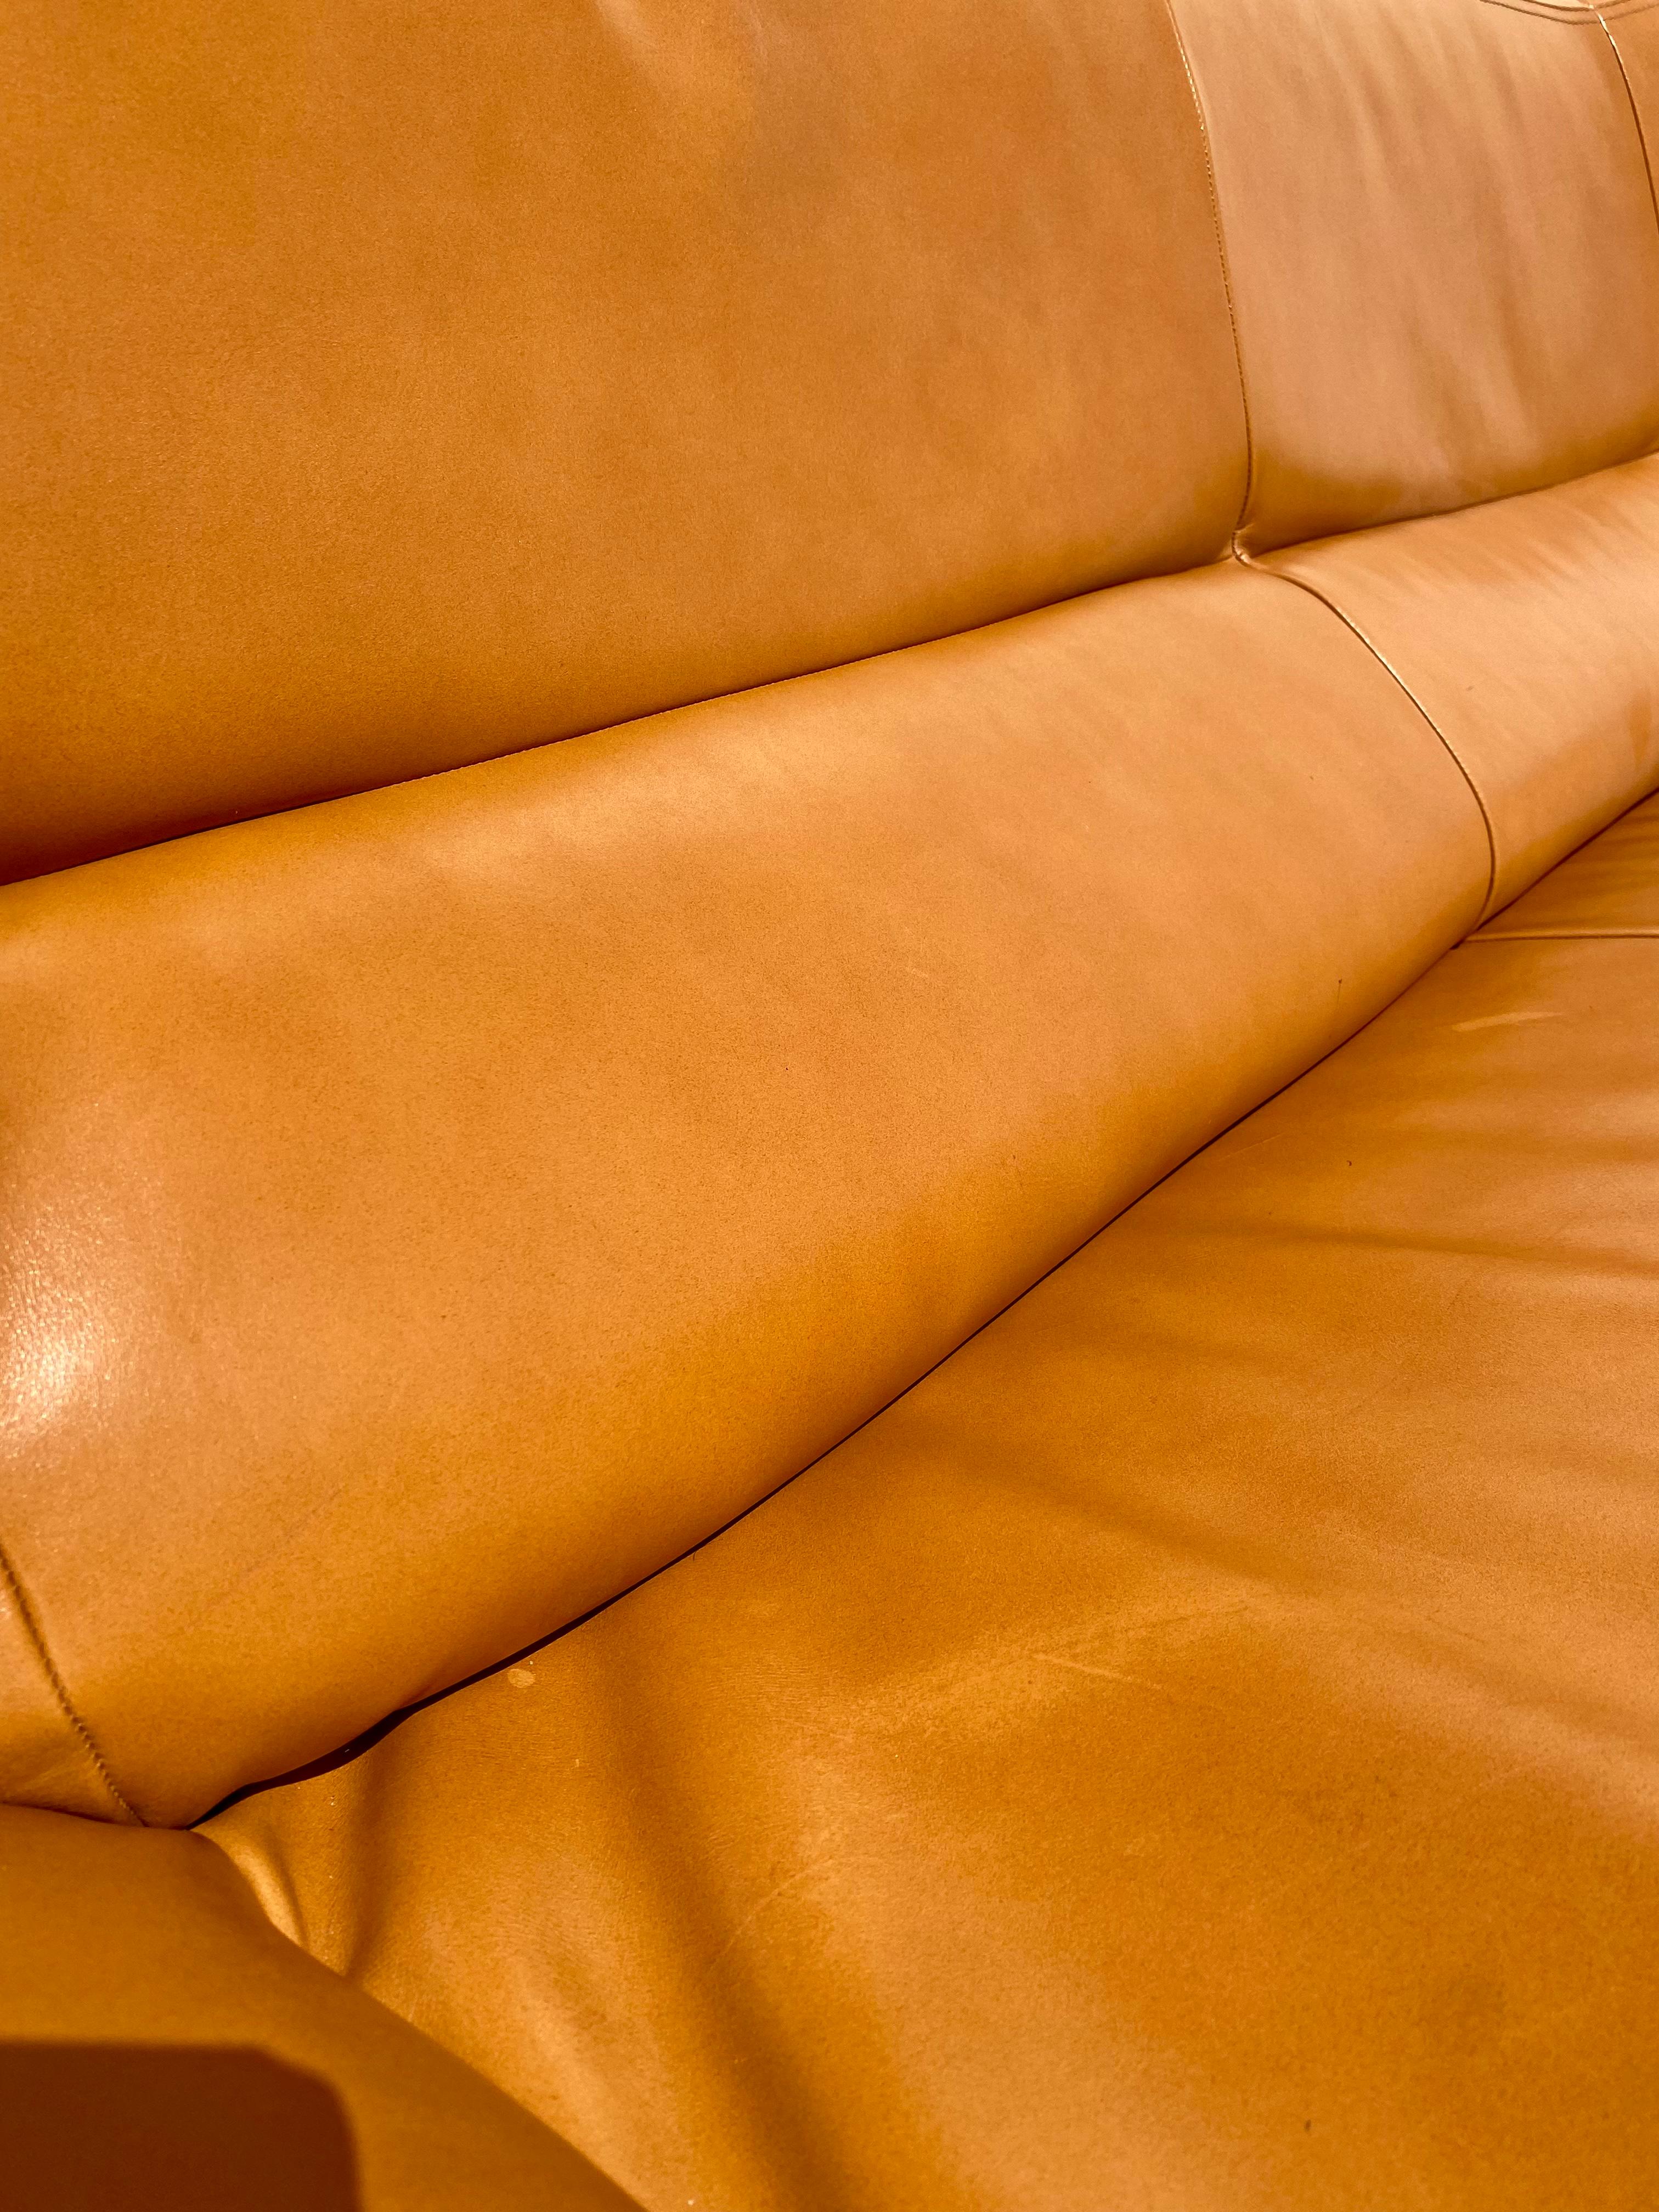 1990s Nicoletti Salotti Post-Modern & Sleek Fine Tan Leather Sofa For Sale 6